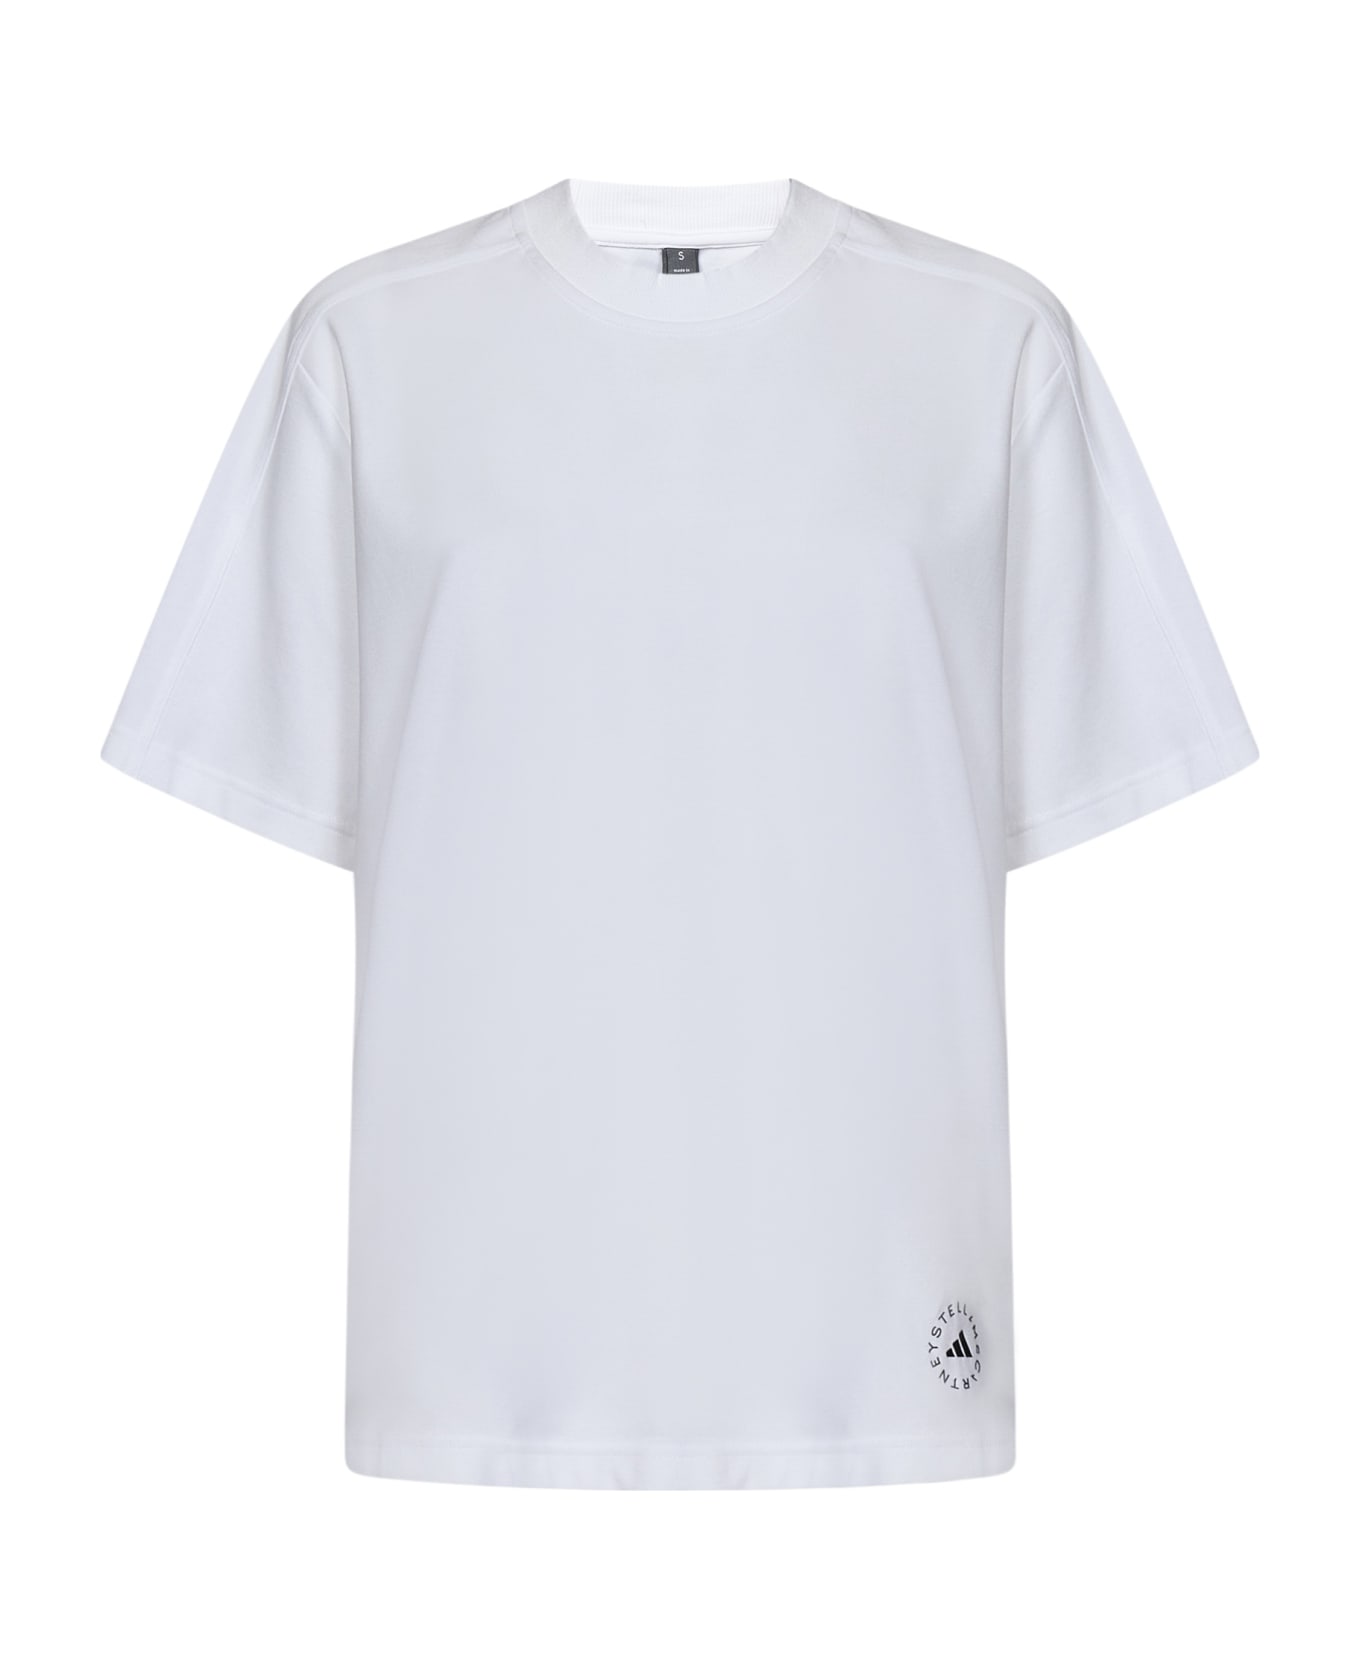 Adidas by Stella McCartney T-shirt - White Tシャツ